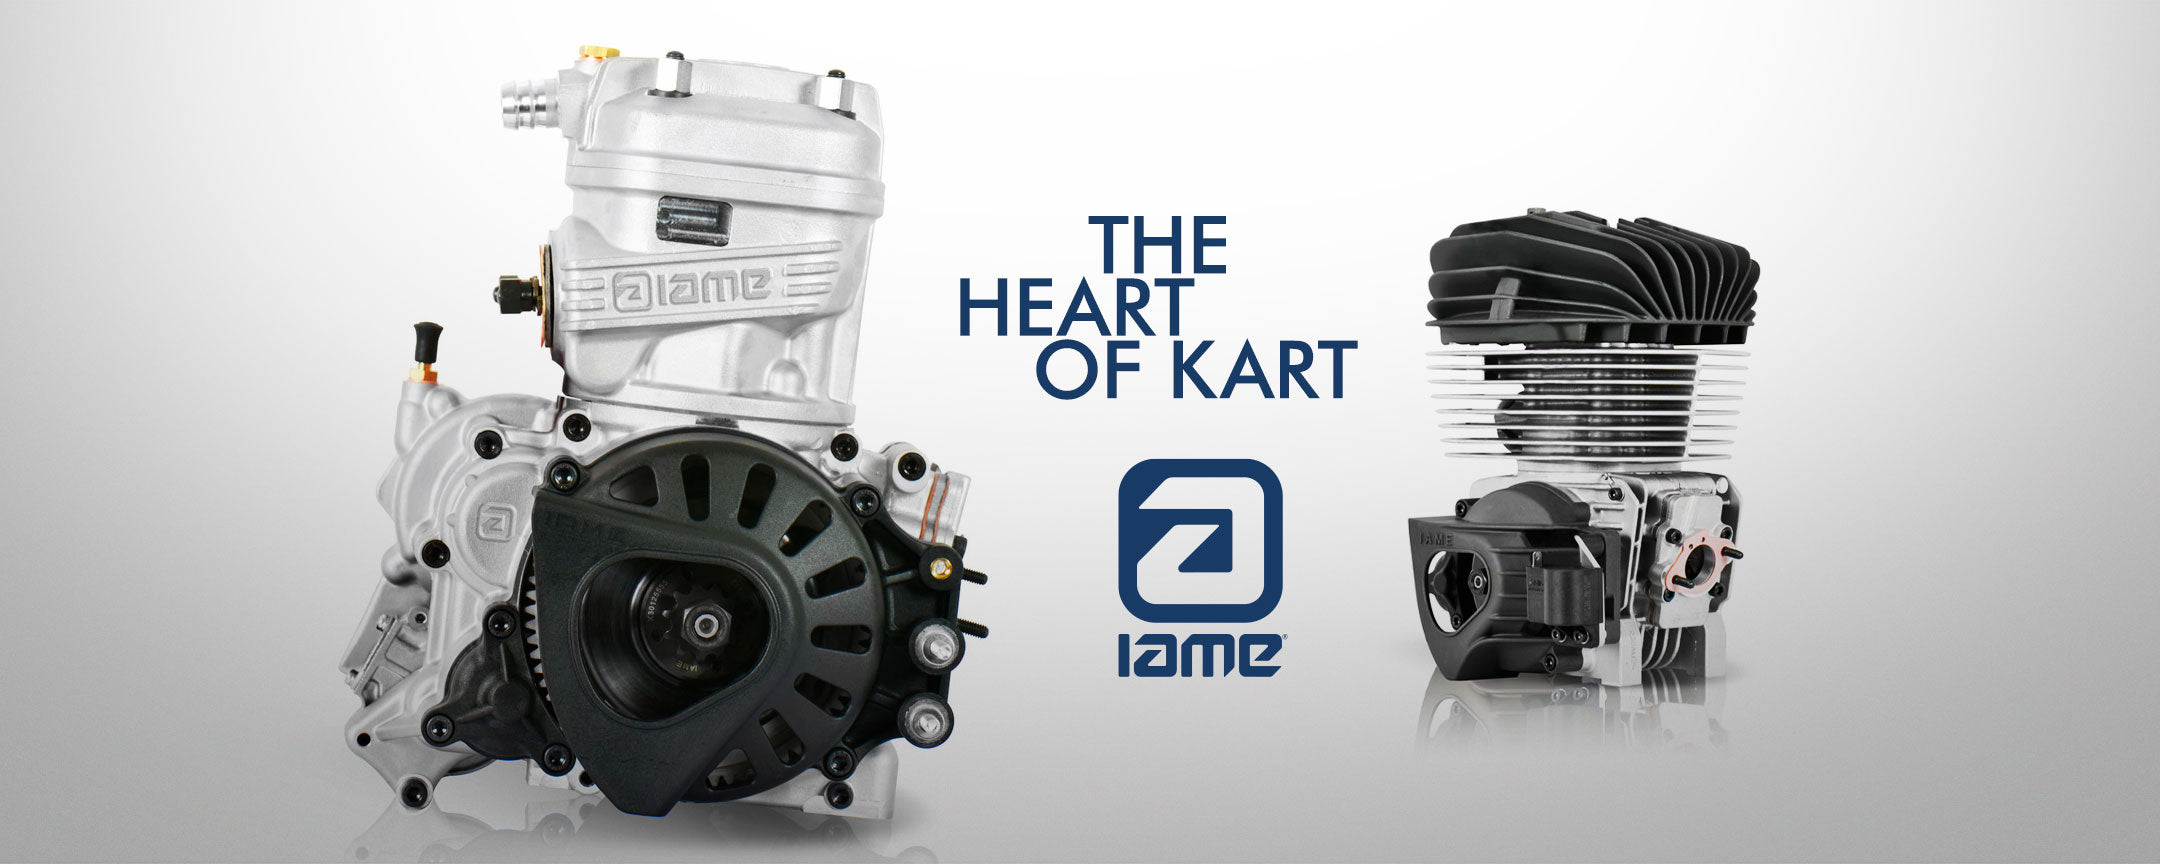 IAME Kart Engines | High performance kart racing engines | Go Kart Engines